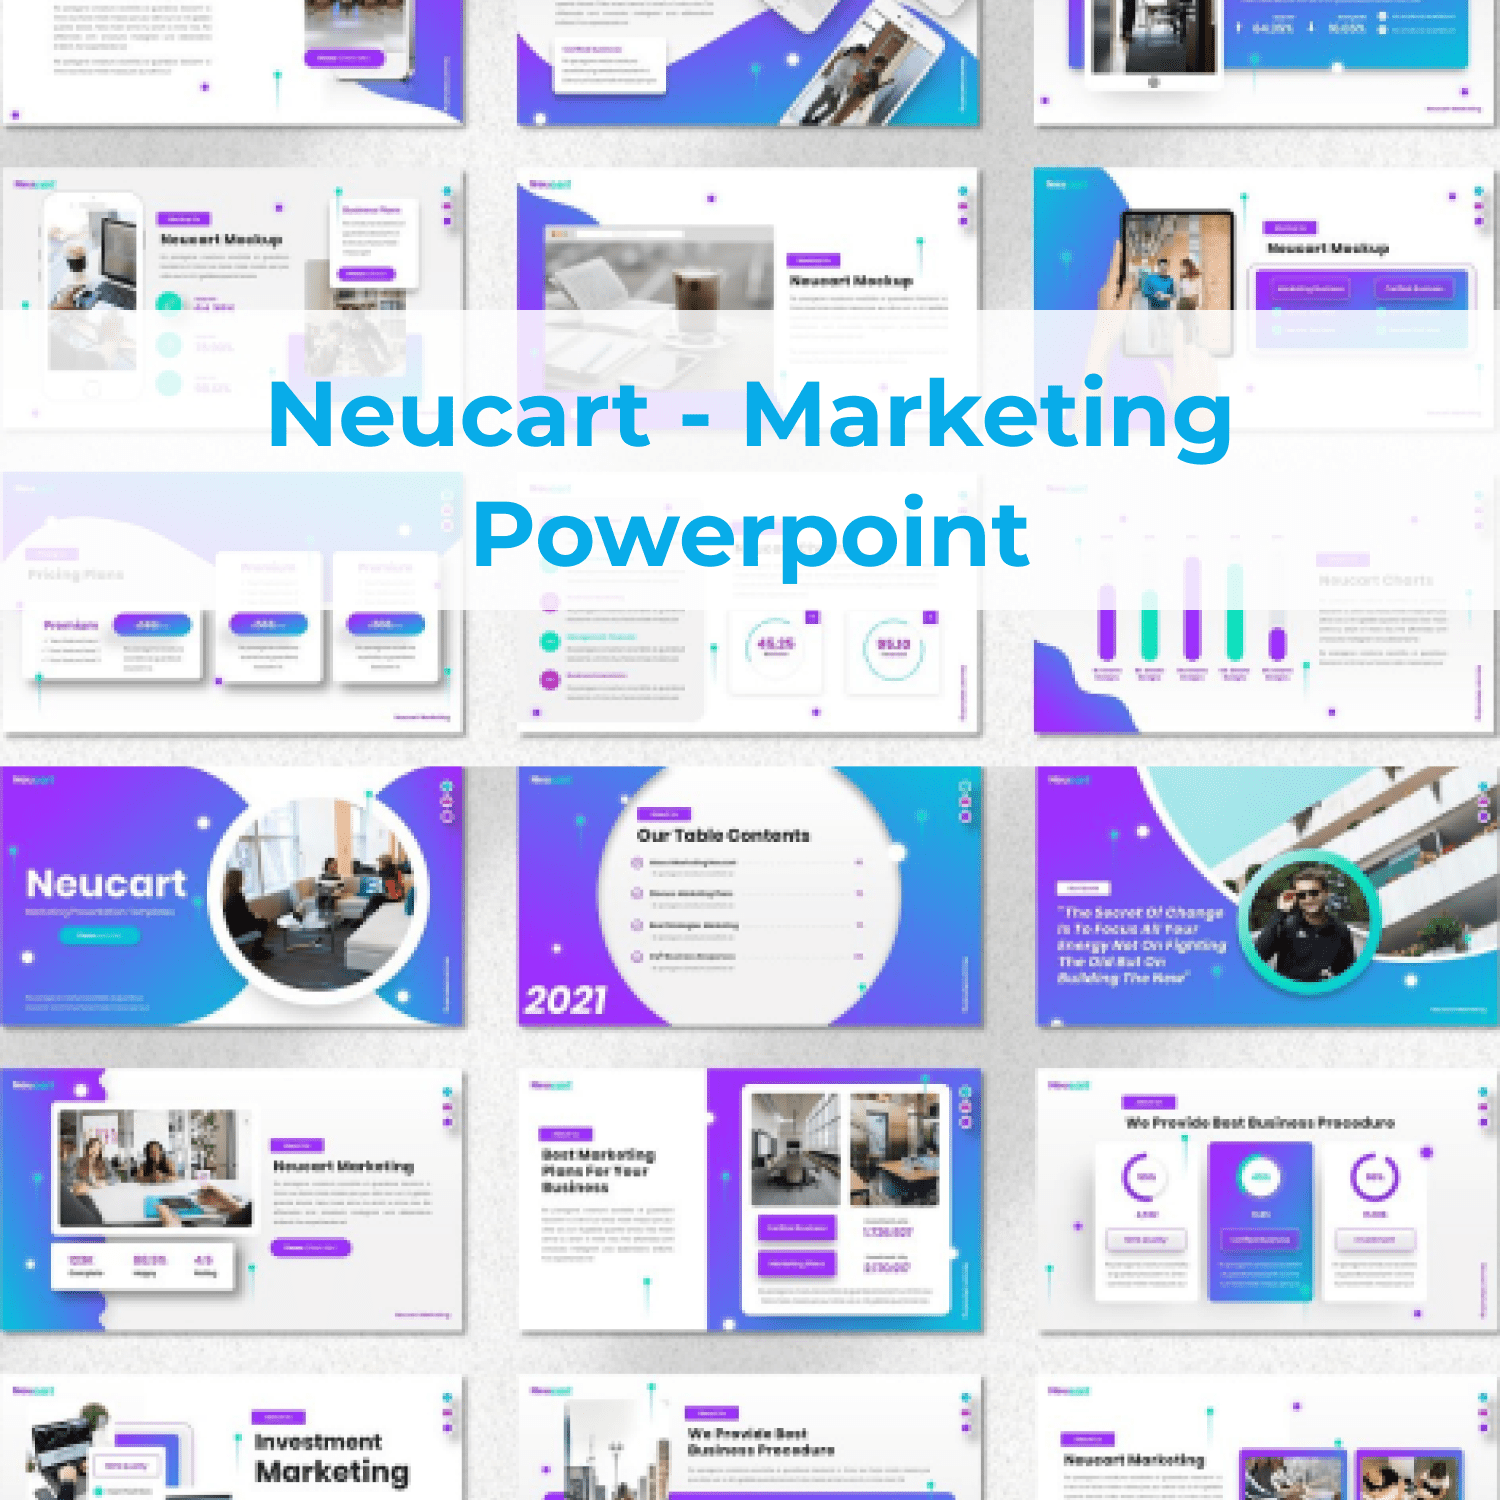 Neucart - Marketing Powerpoint cover image.